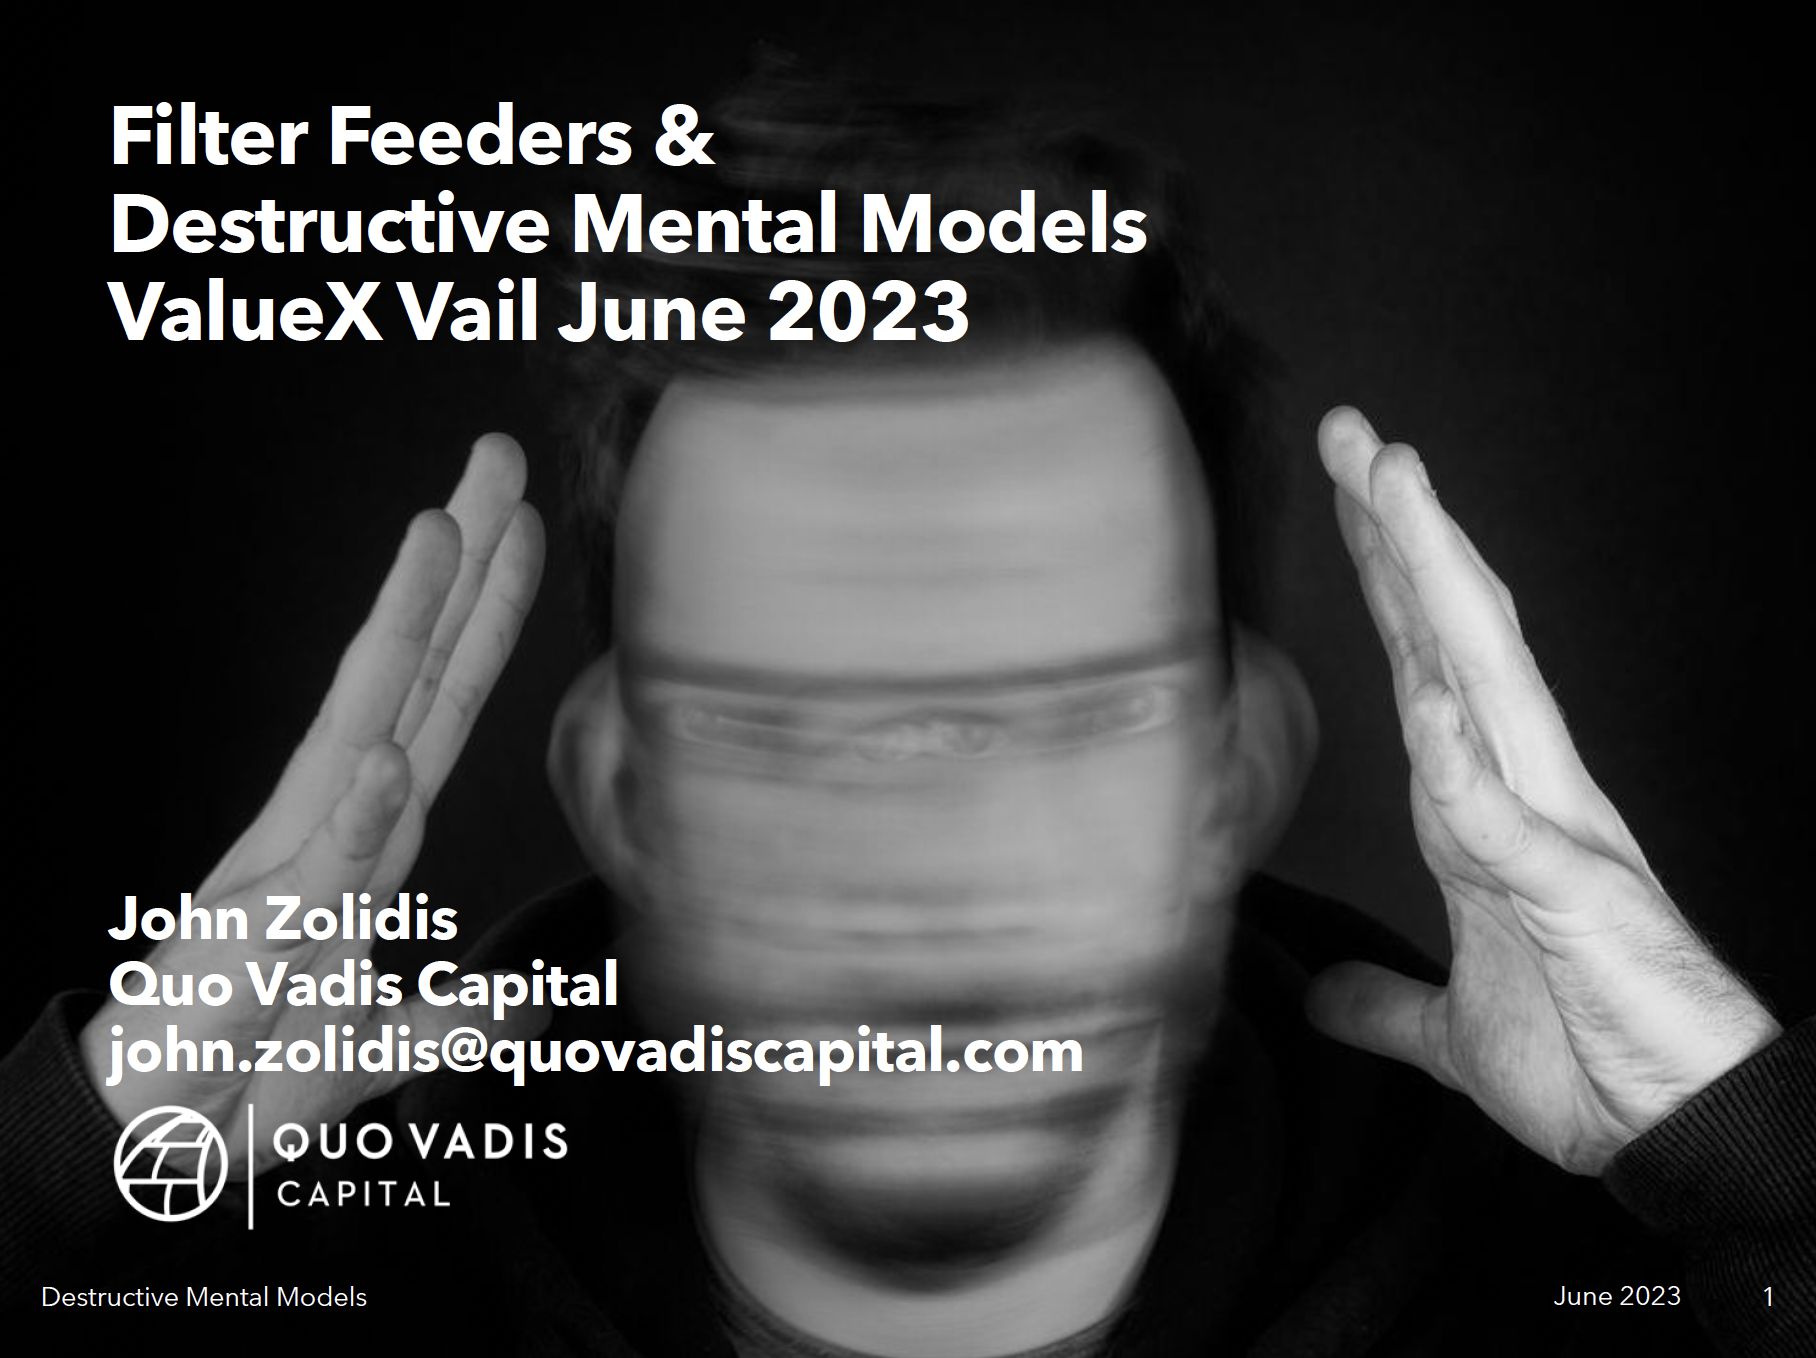 Filter Feeders & Destructive Mental Models - ValueXVail 2023